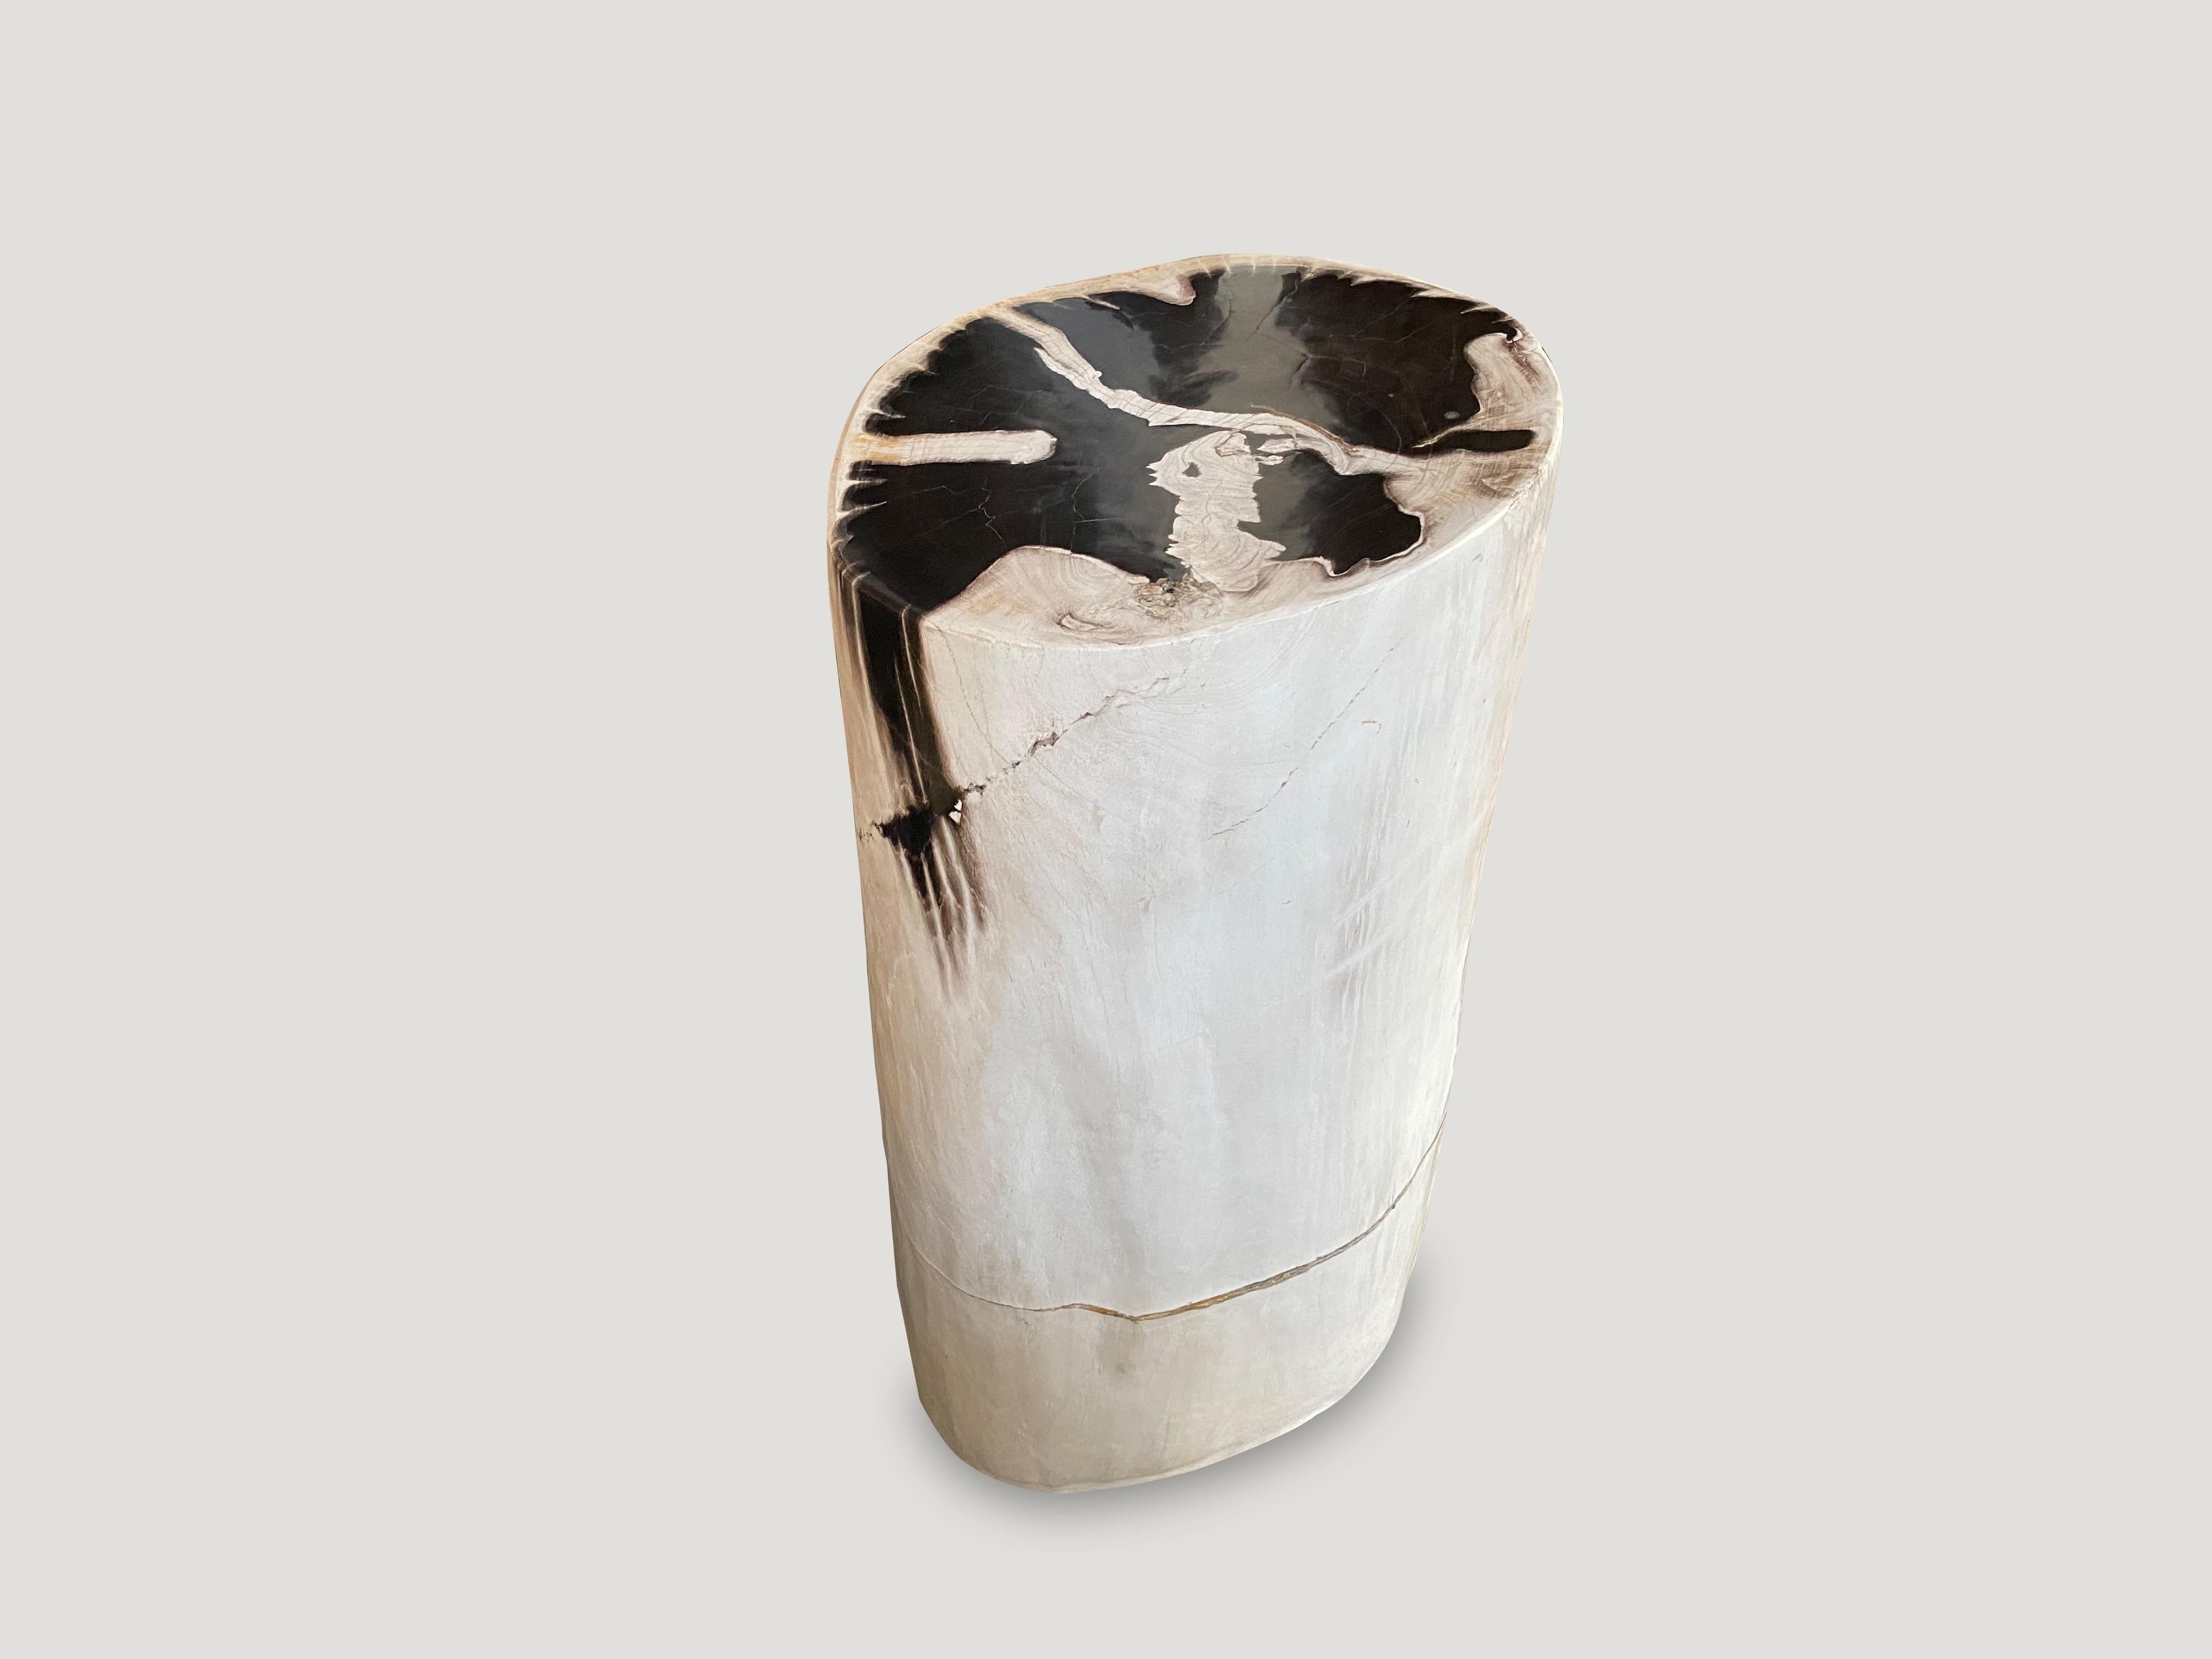 Organic Modern Andrianna Shamaris Super Smooth Black and White Petrified Wood Pedestal